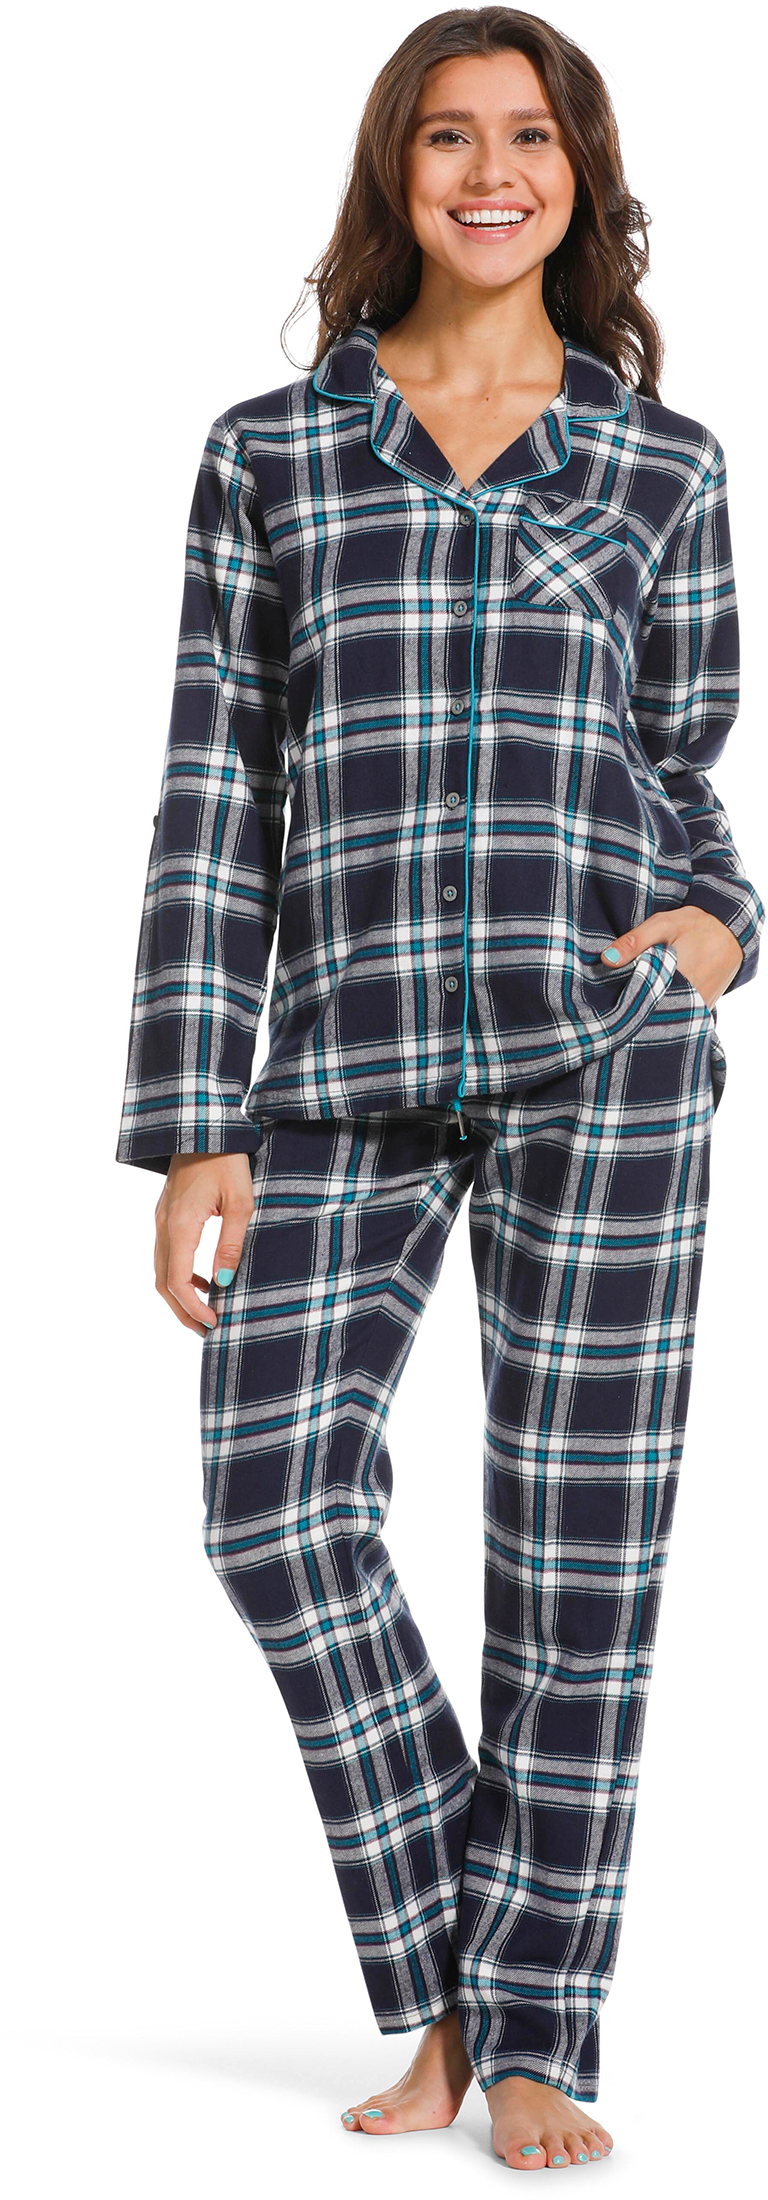 Rebelle dames pyjama flanel 21222-408-6 - Blauw - 42